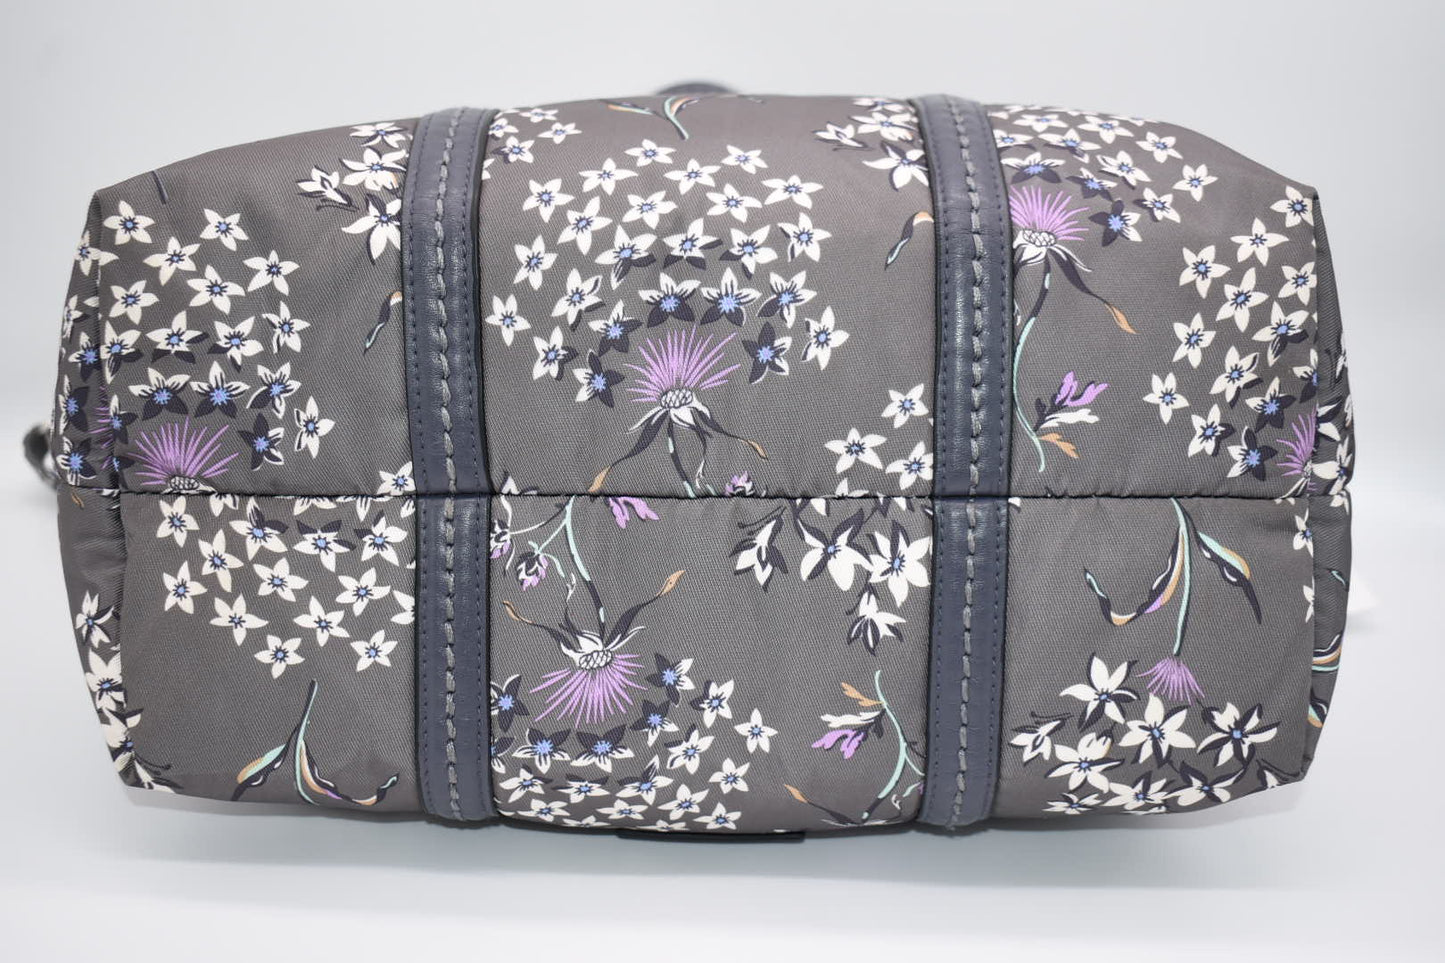 Vera Bradley Midtown Small Tote Bag in "Dandelion Wishes" Pattern